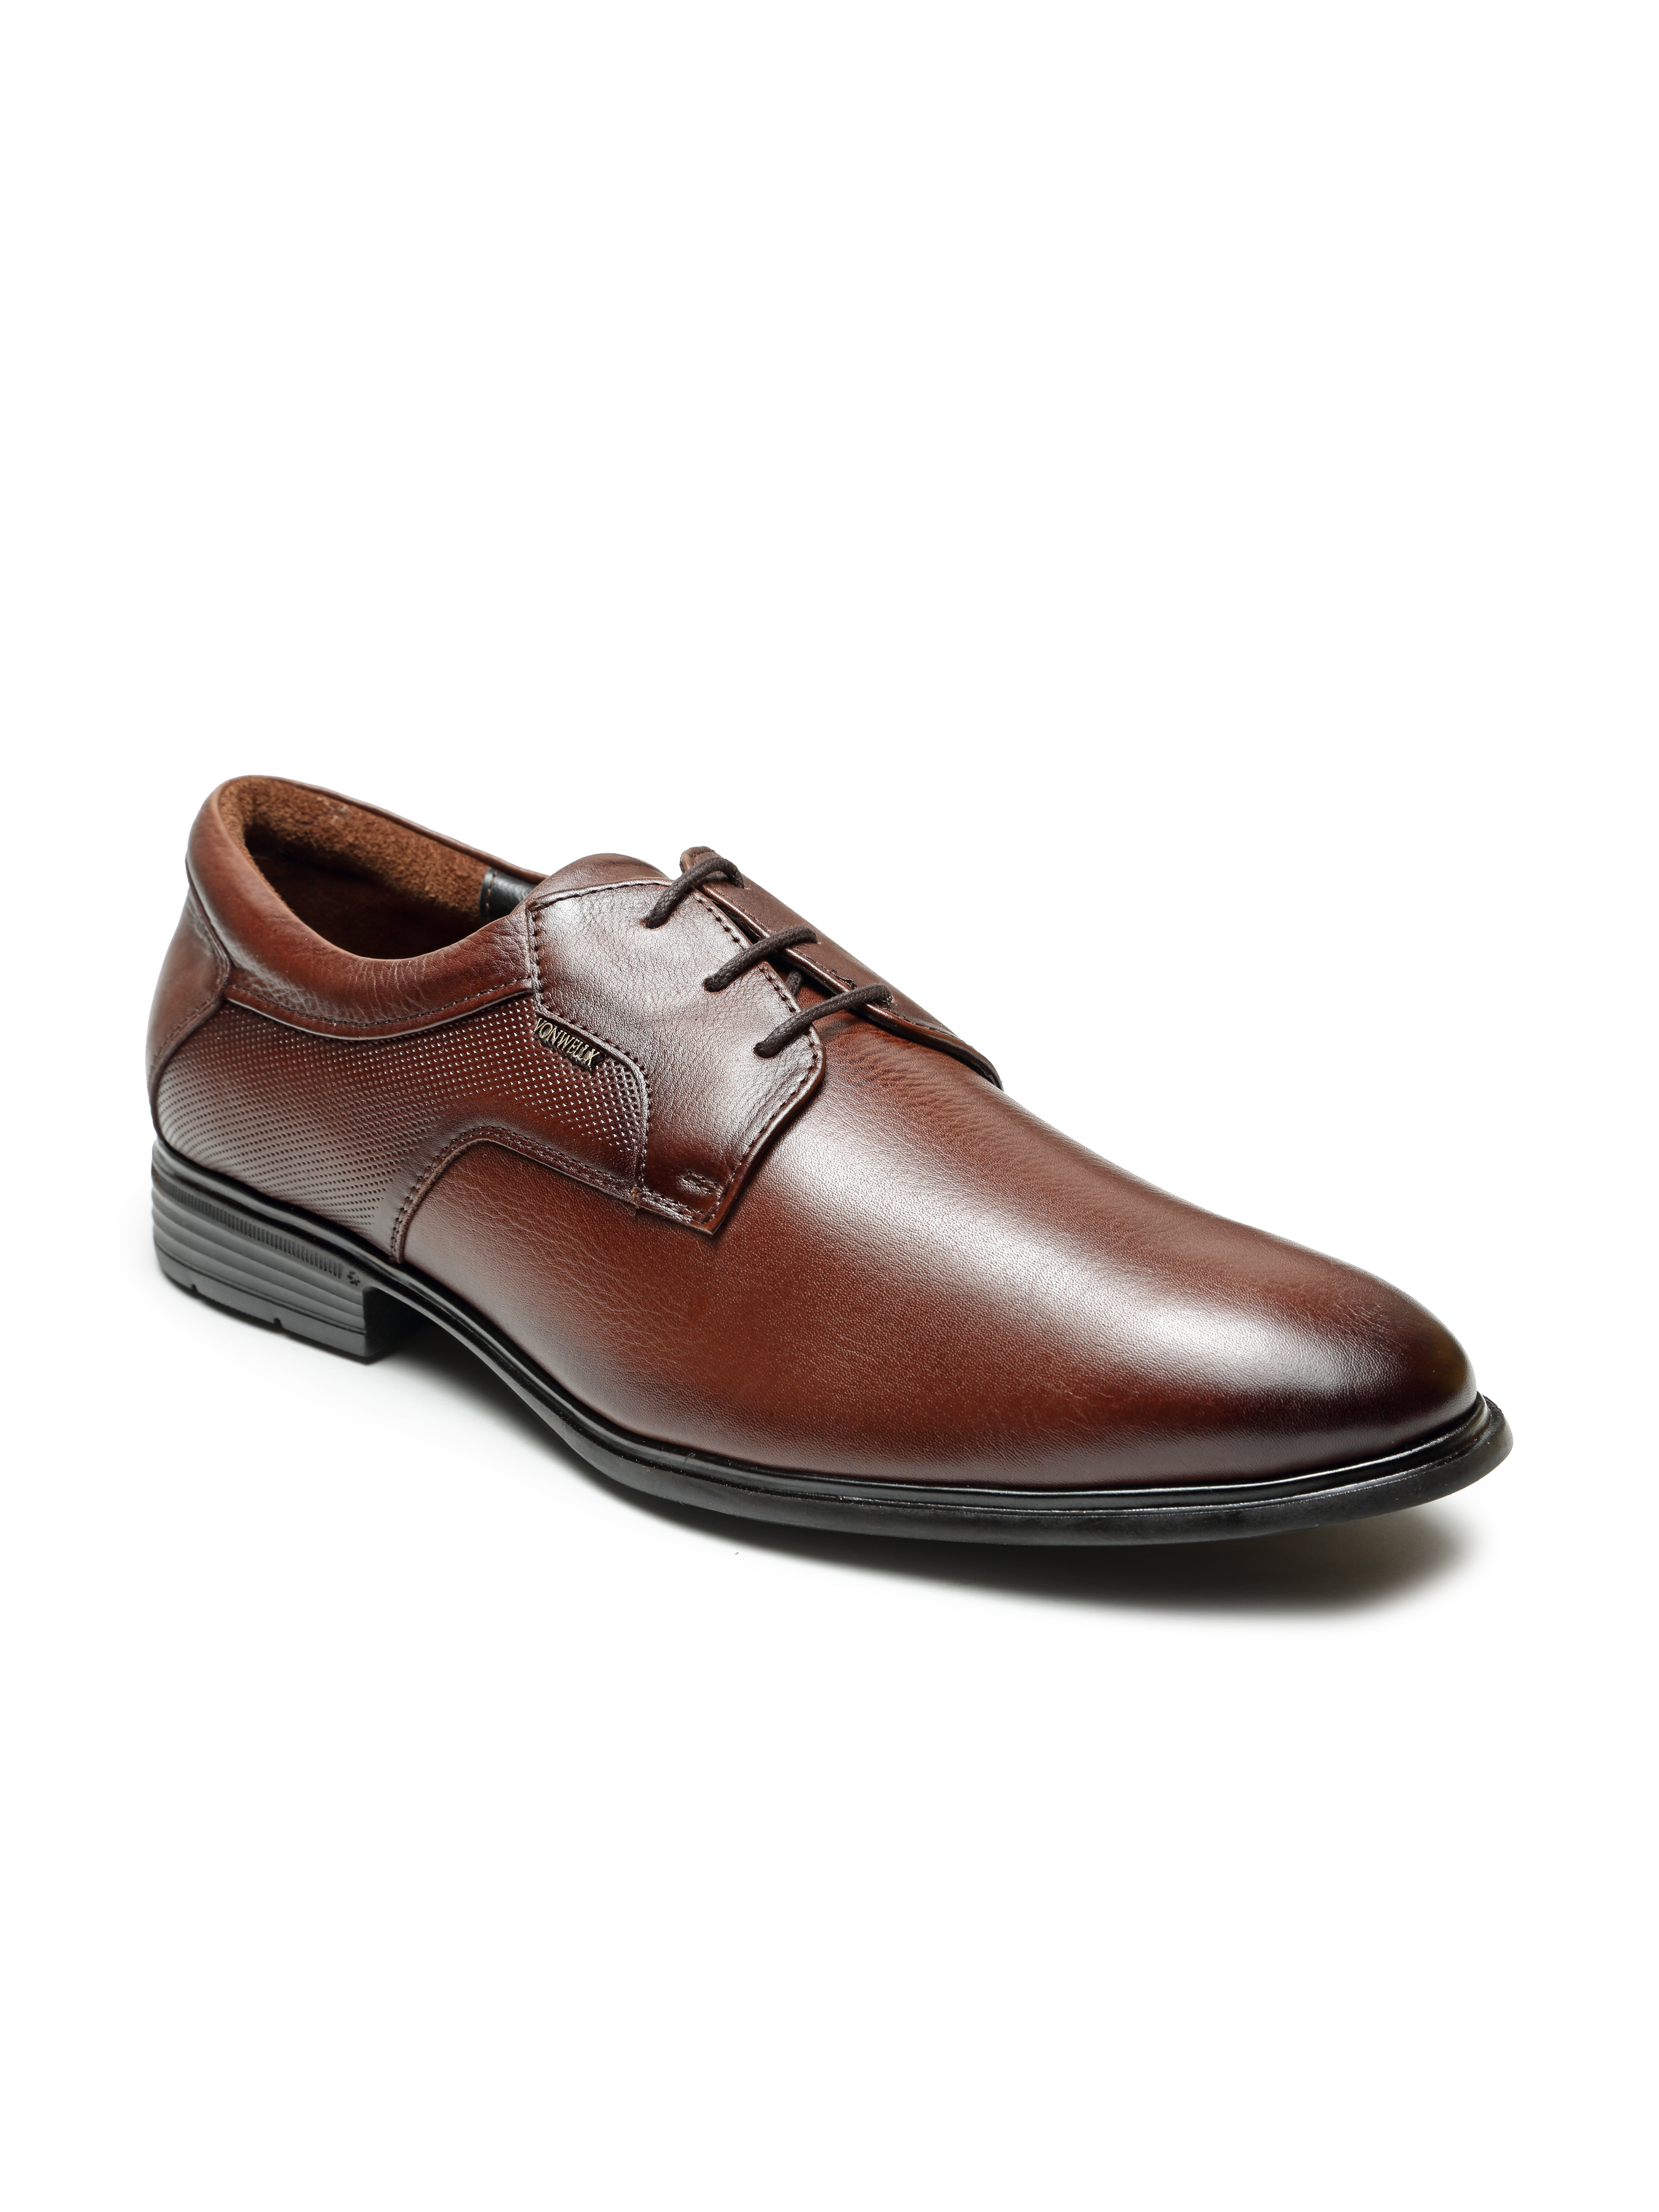 VON WELLX GERMANY comfort men's brown formal shoes ADLER